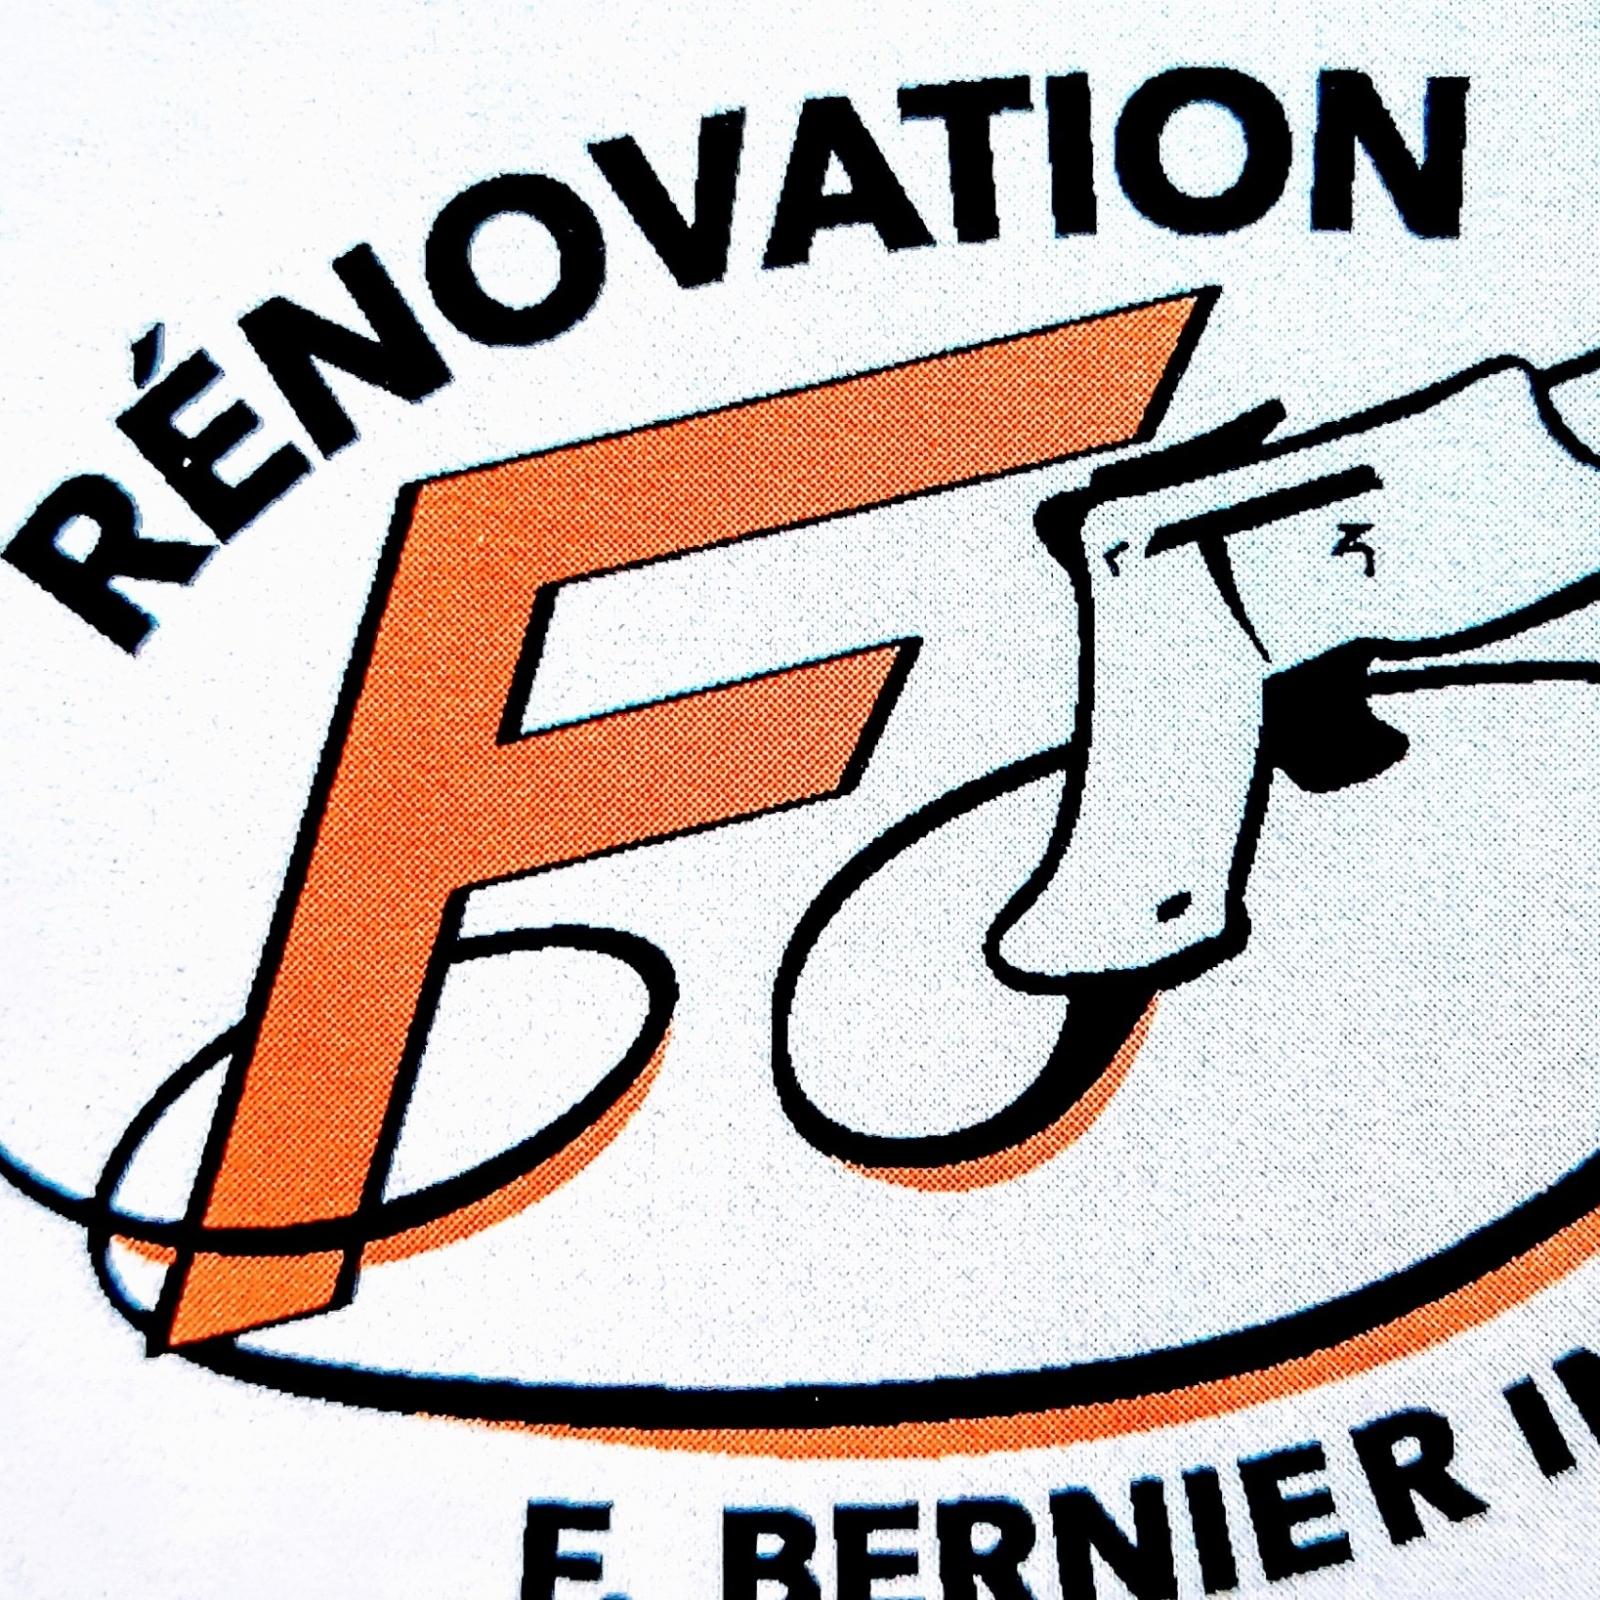 Rénovation F. Bernier Logo